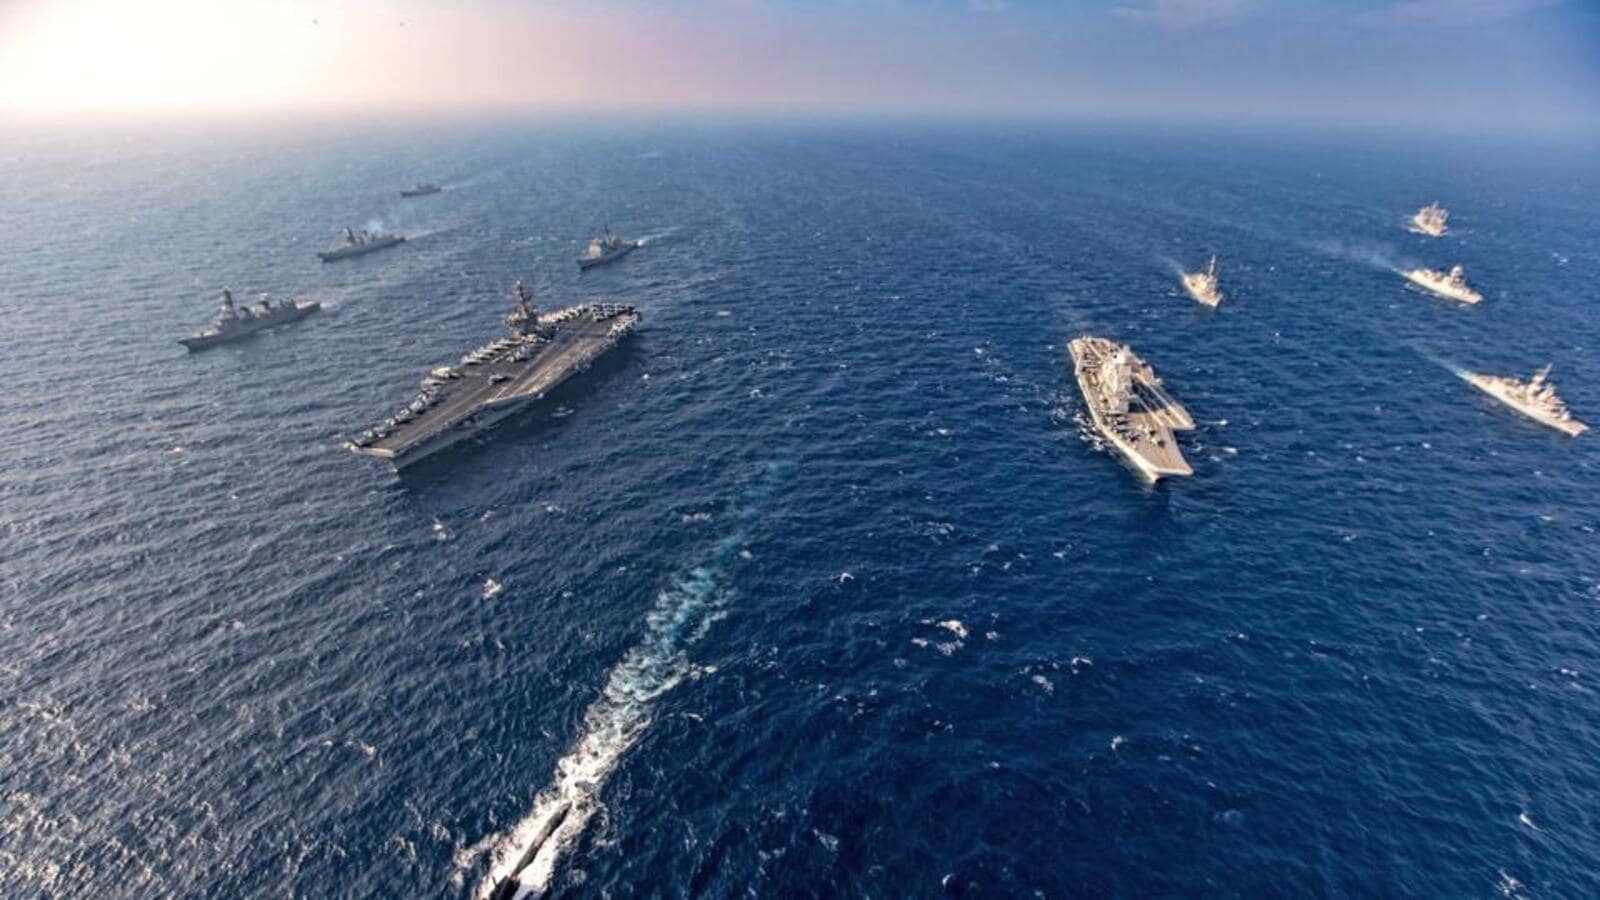 Amerika Serikat membantu India dalam proyek kekuatan untuk melawan aktivitas angkatan laut China: pejabat AS |  berita terbaru india